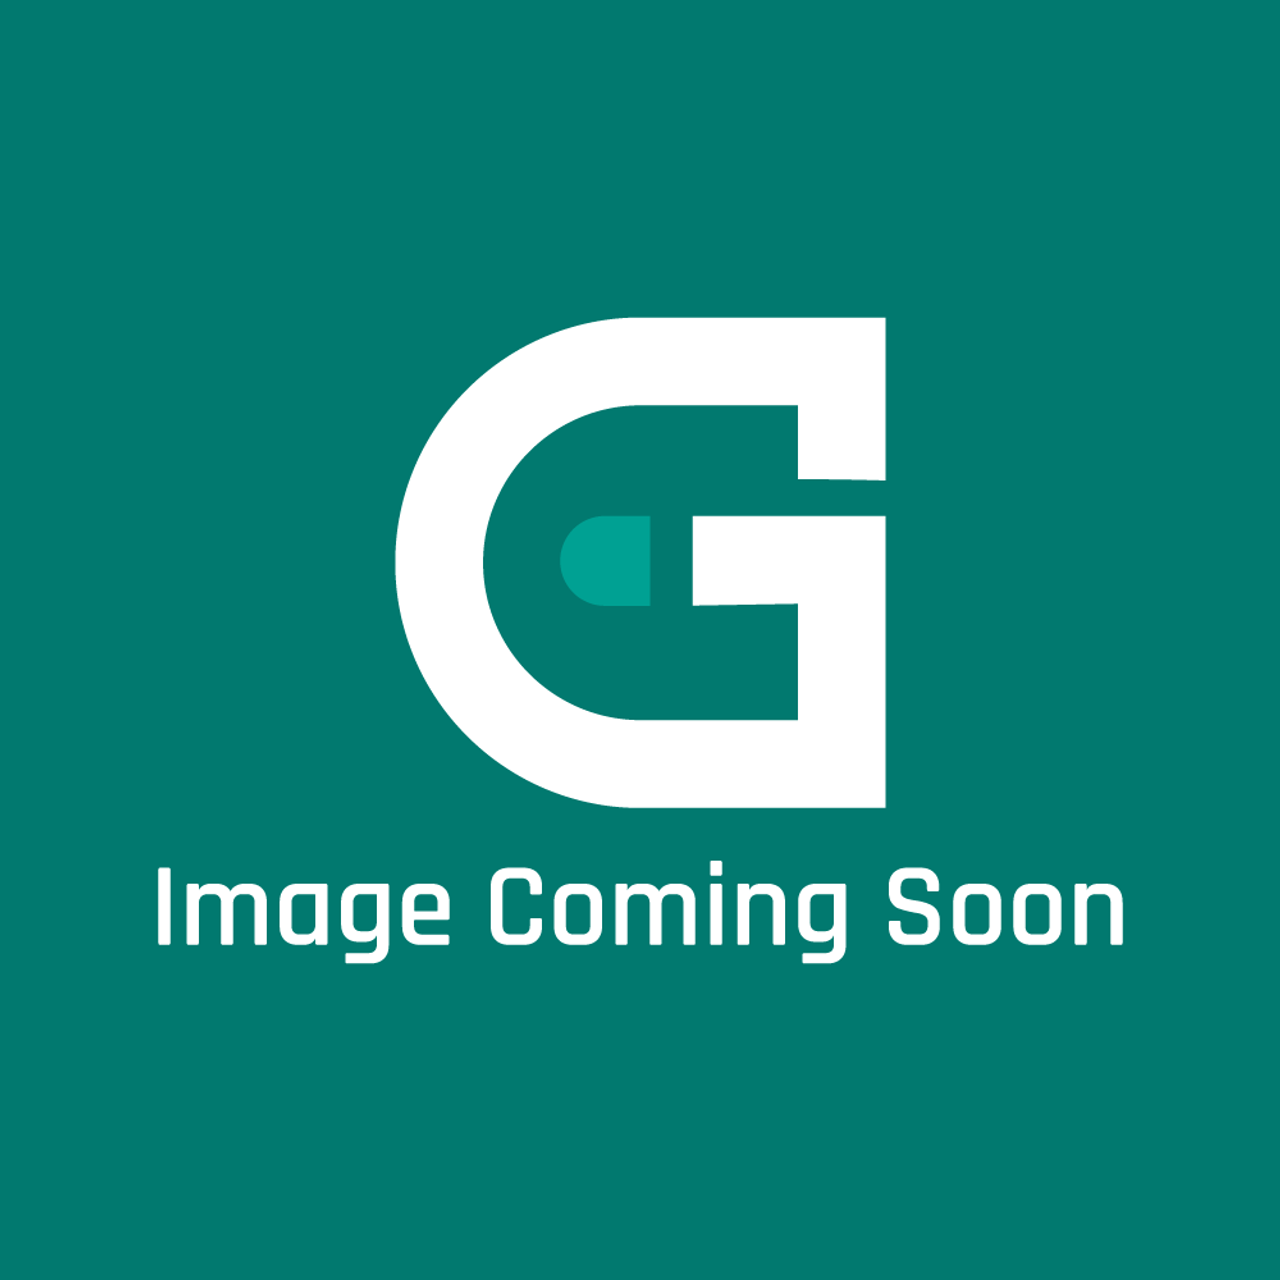 Garland 4532956 - Kit, 3 Platen Assy 208V W/ Fai - Image Coming Soon!